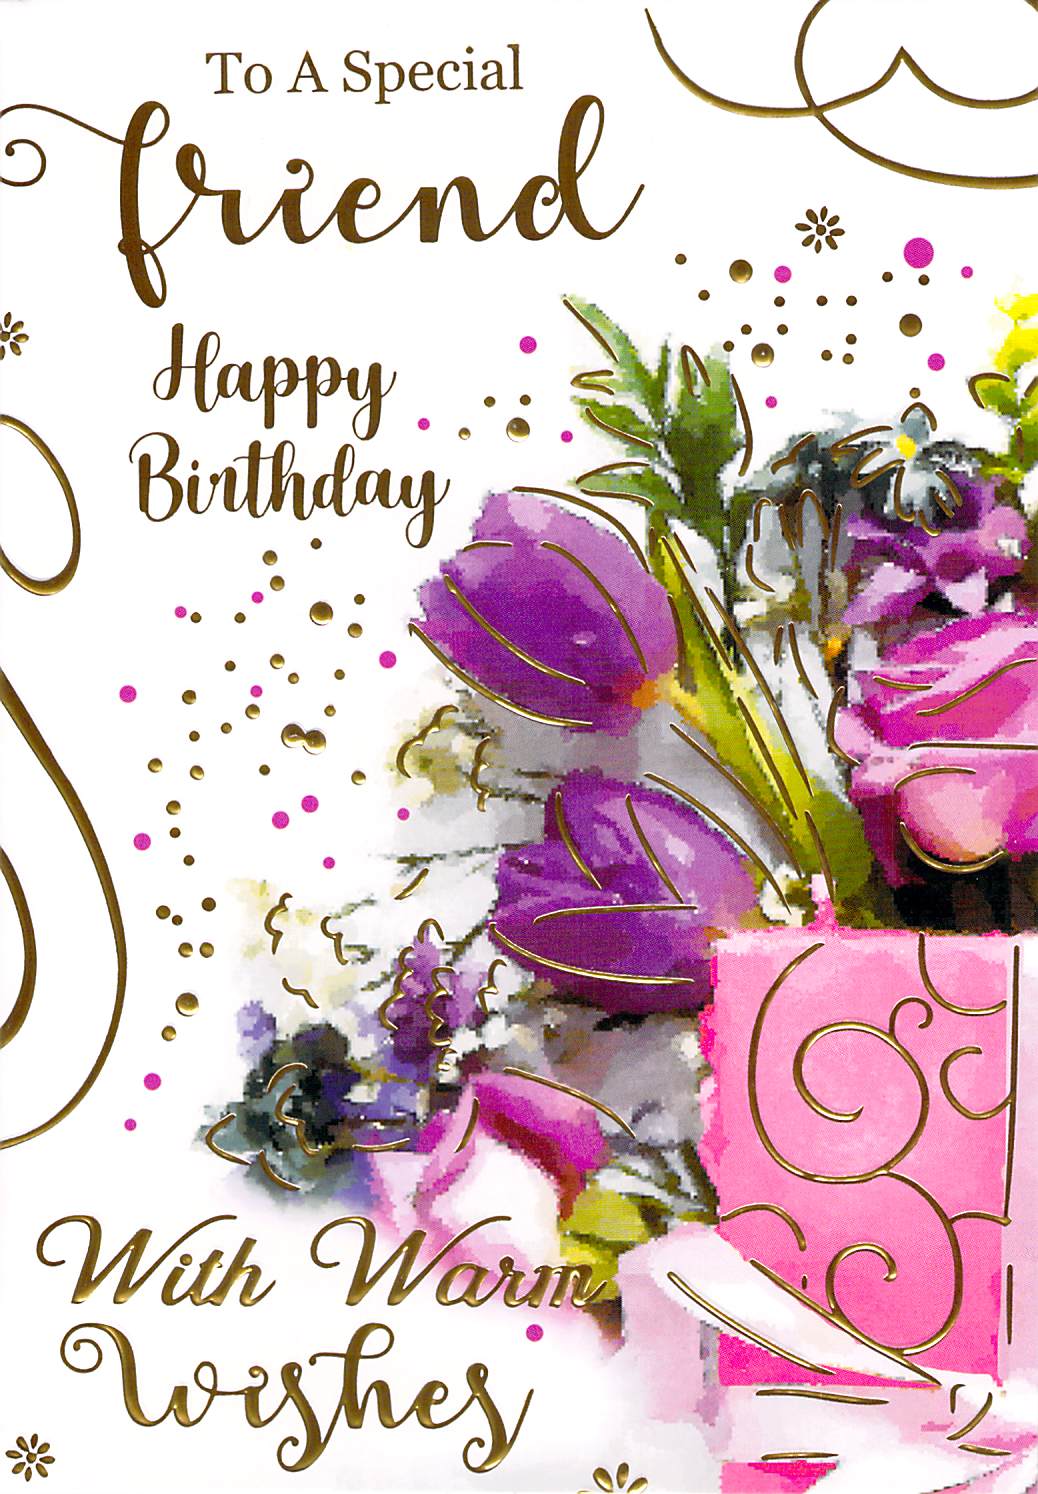 Friend - Birthday Greeting Card - Flowers  - Multi Buy Discount